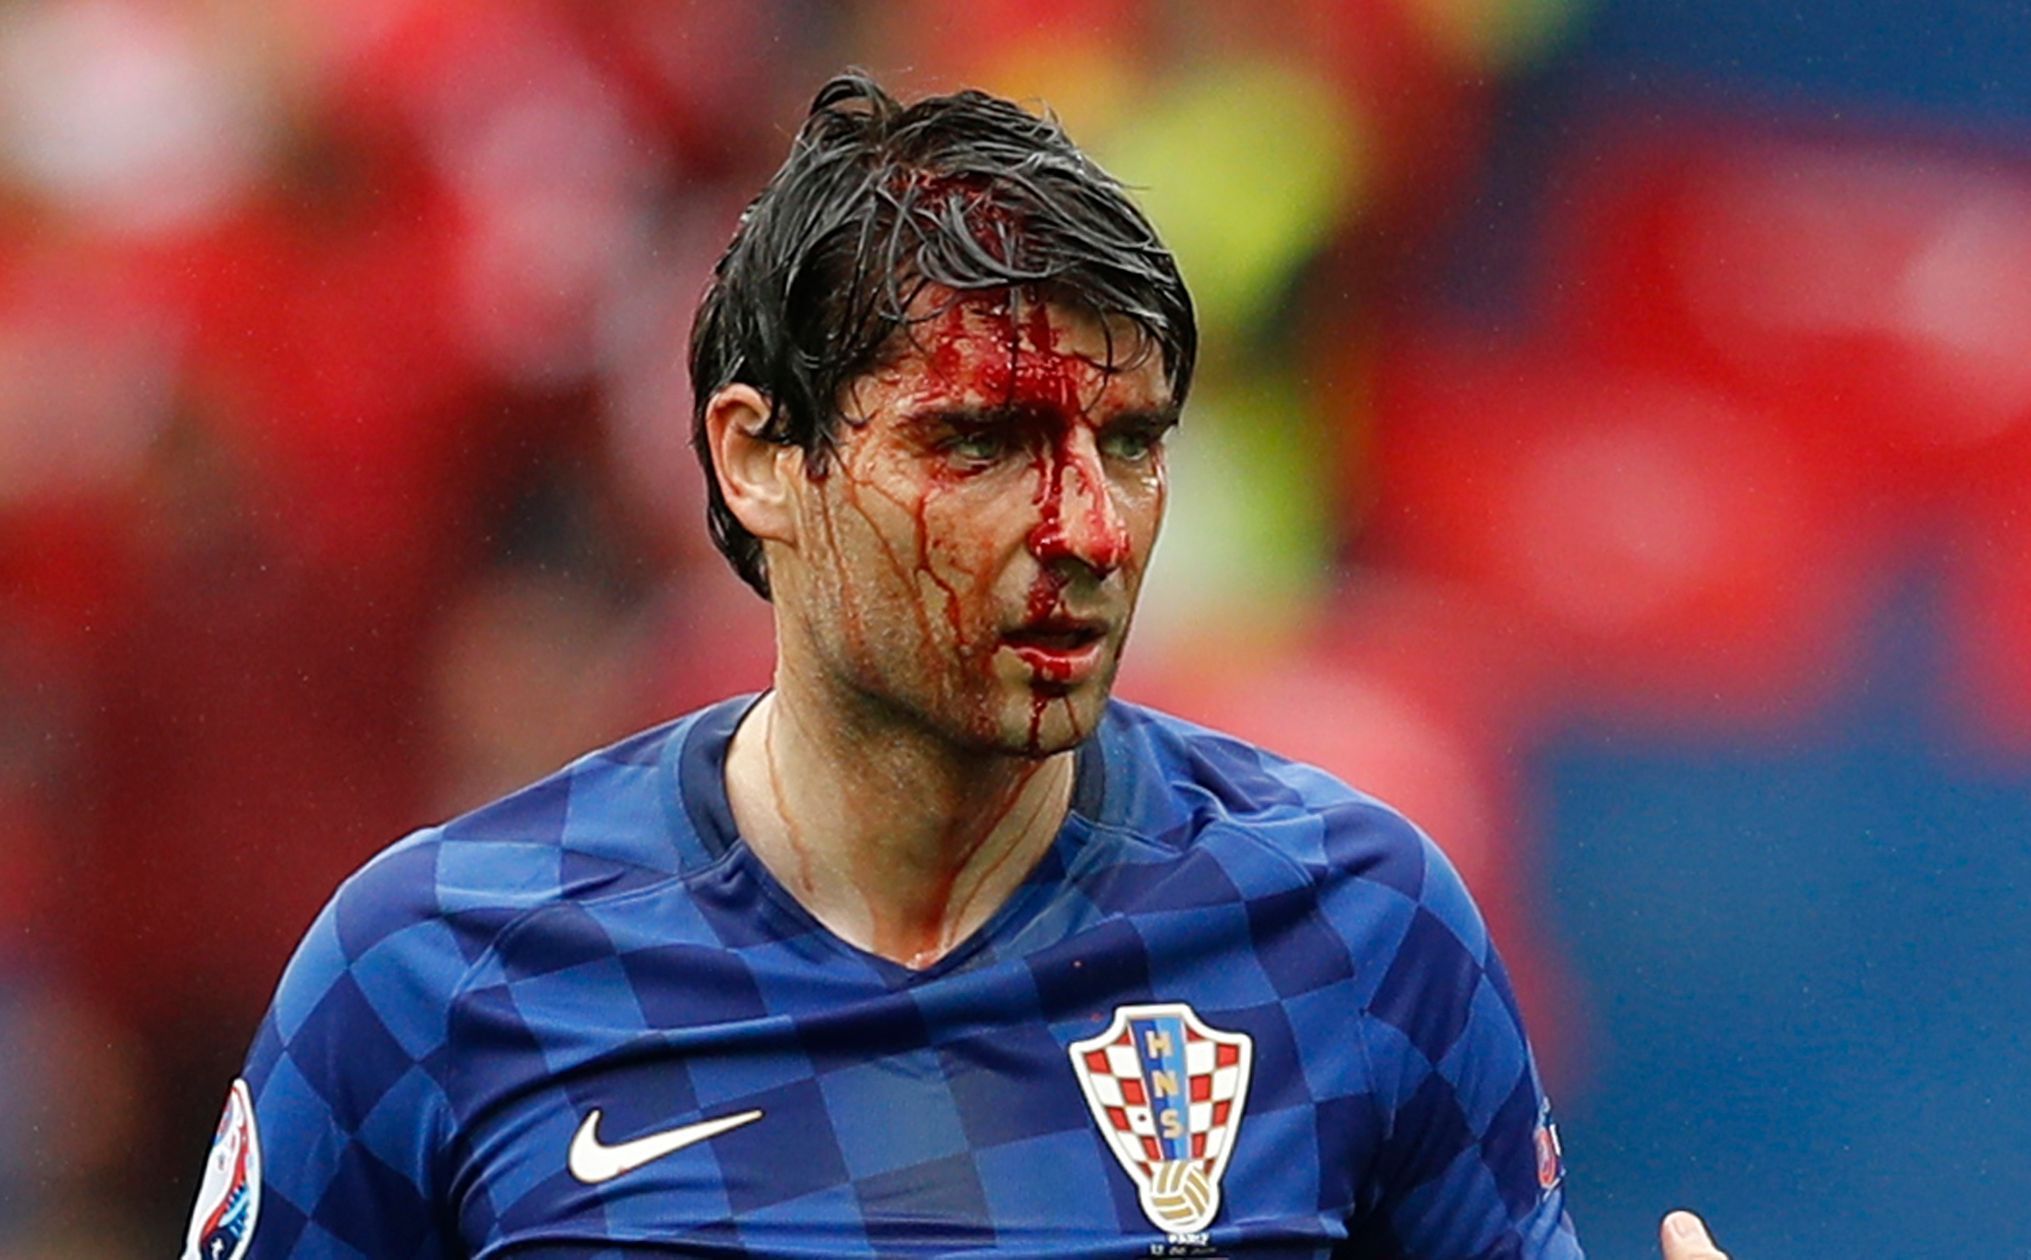 Euro 2016: Turecko-Chorvatsko: zraněný Vedran Čorluka